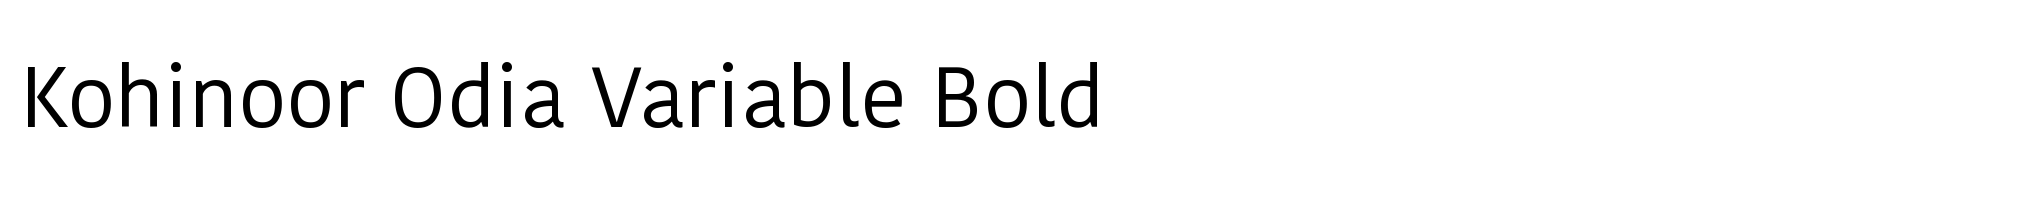 Kohinoor Odia Variable Bold image